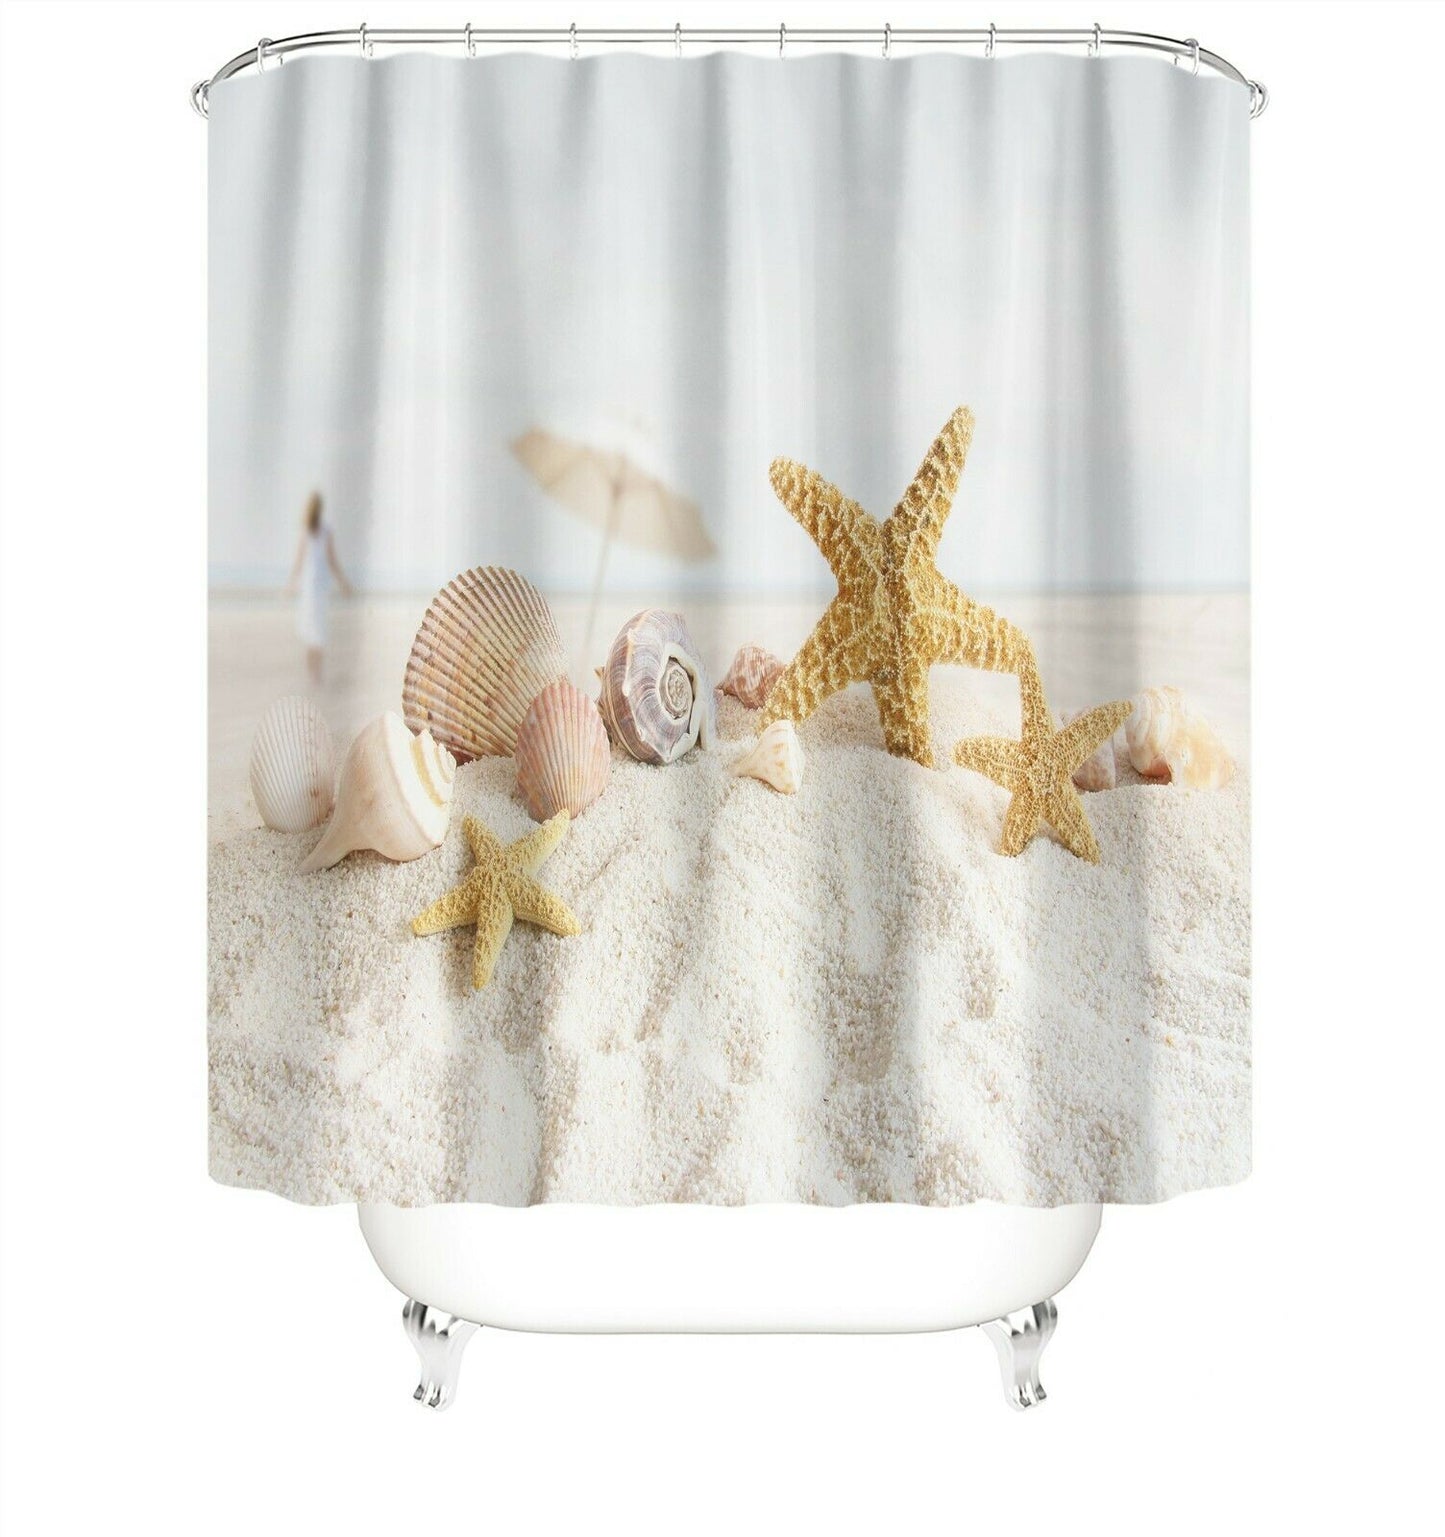 Sandbeach Shower Curtain Bathroom Rug Set Bath Mat Non-Slip Toilet Lid Cover-180×180cm Shower Curtain Only-Free Shipping at meselling99